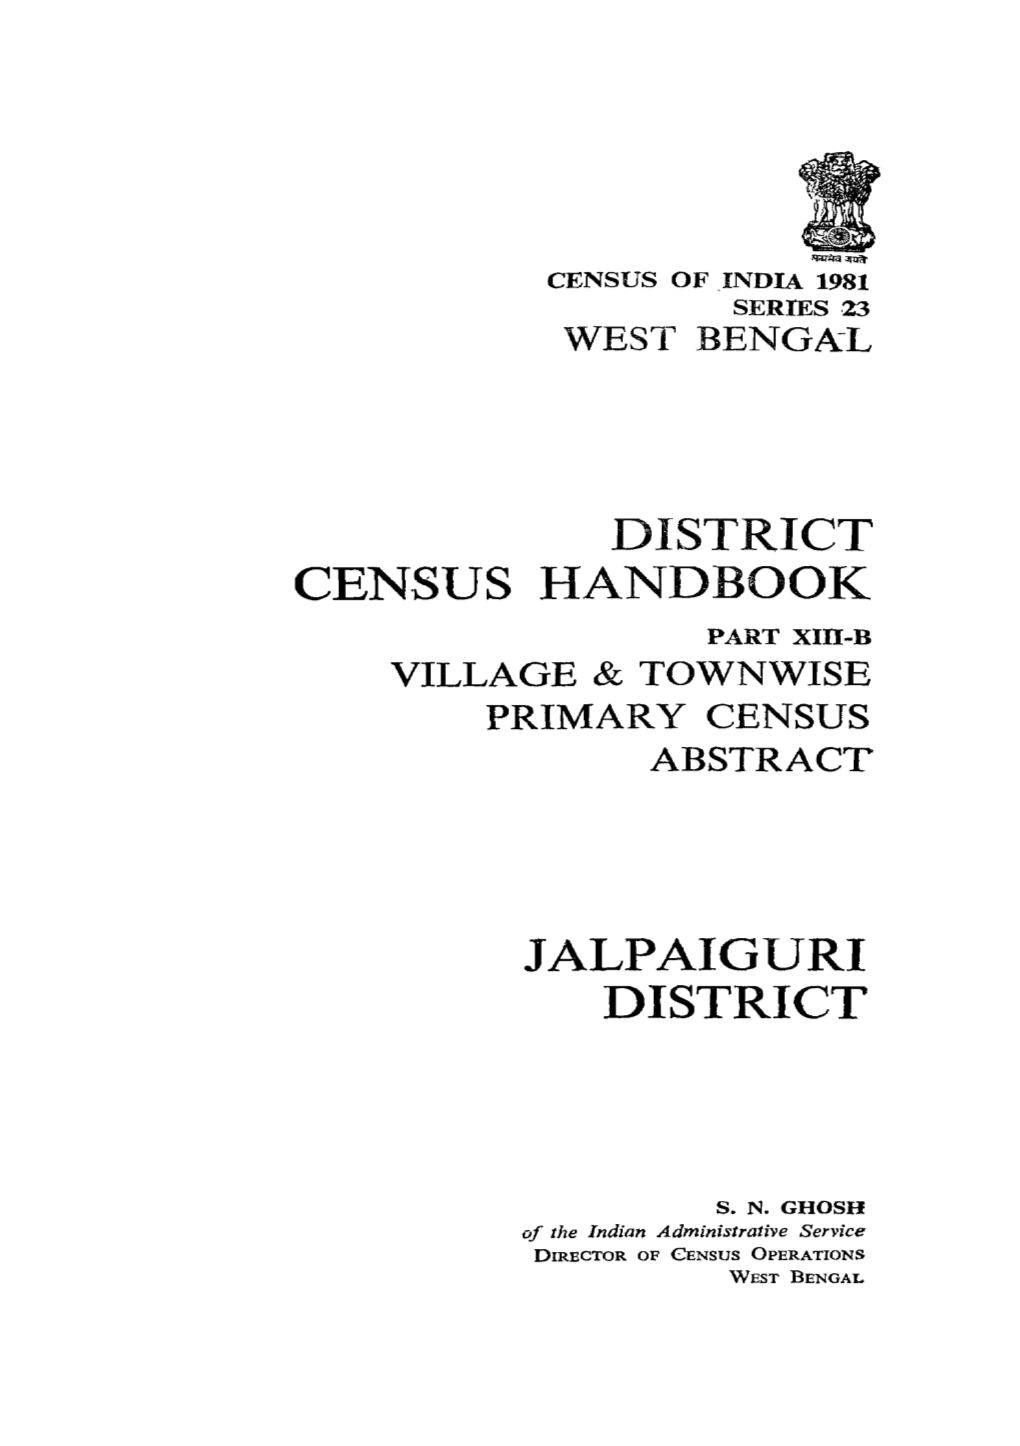 Village & Townwise Primary Census Abstract, Jalpalguri, Part XIII-B